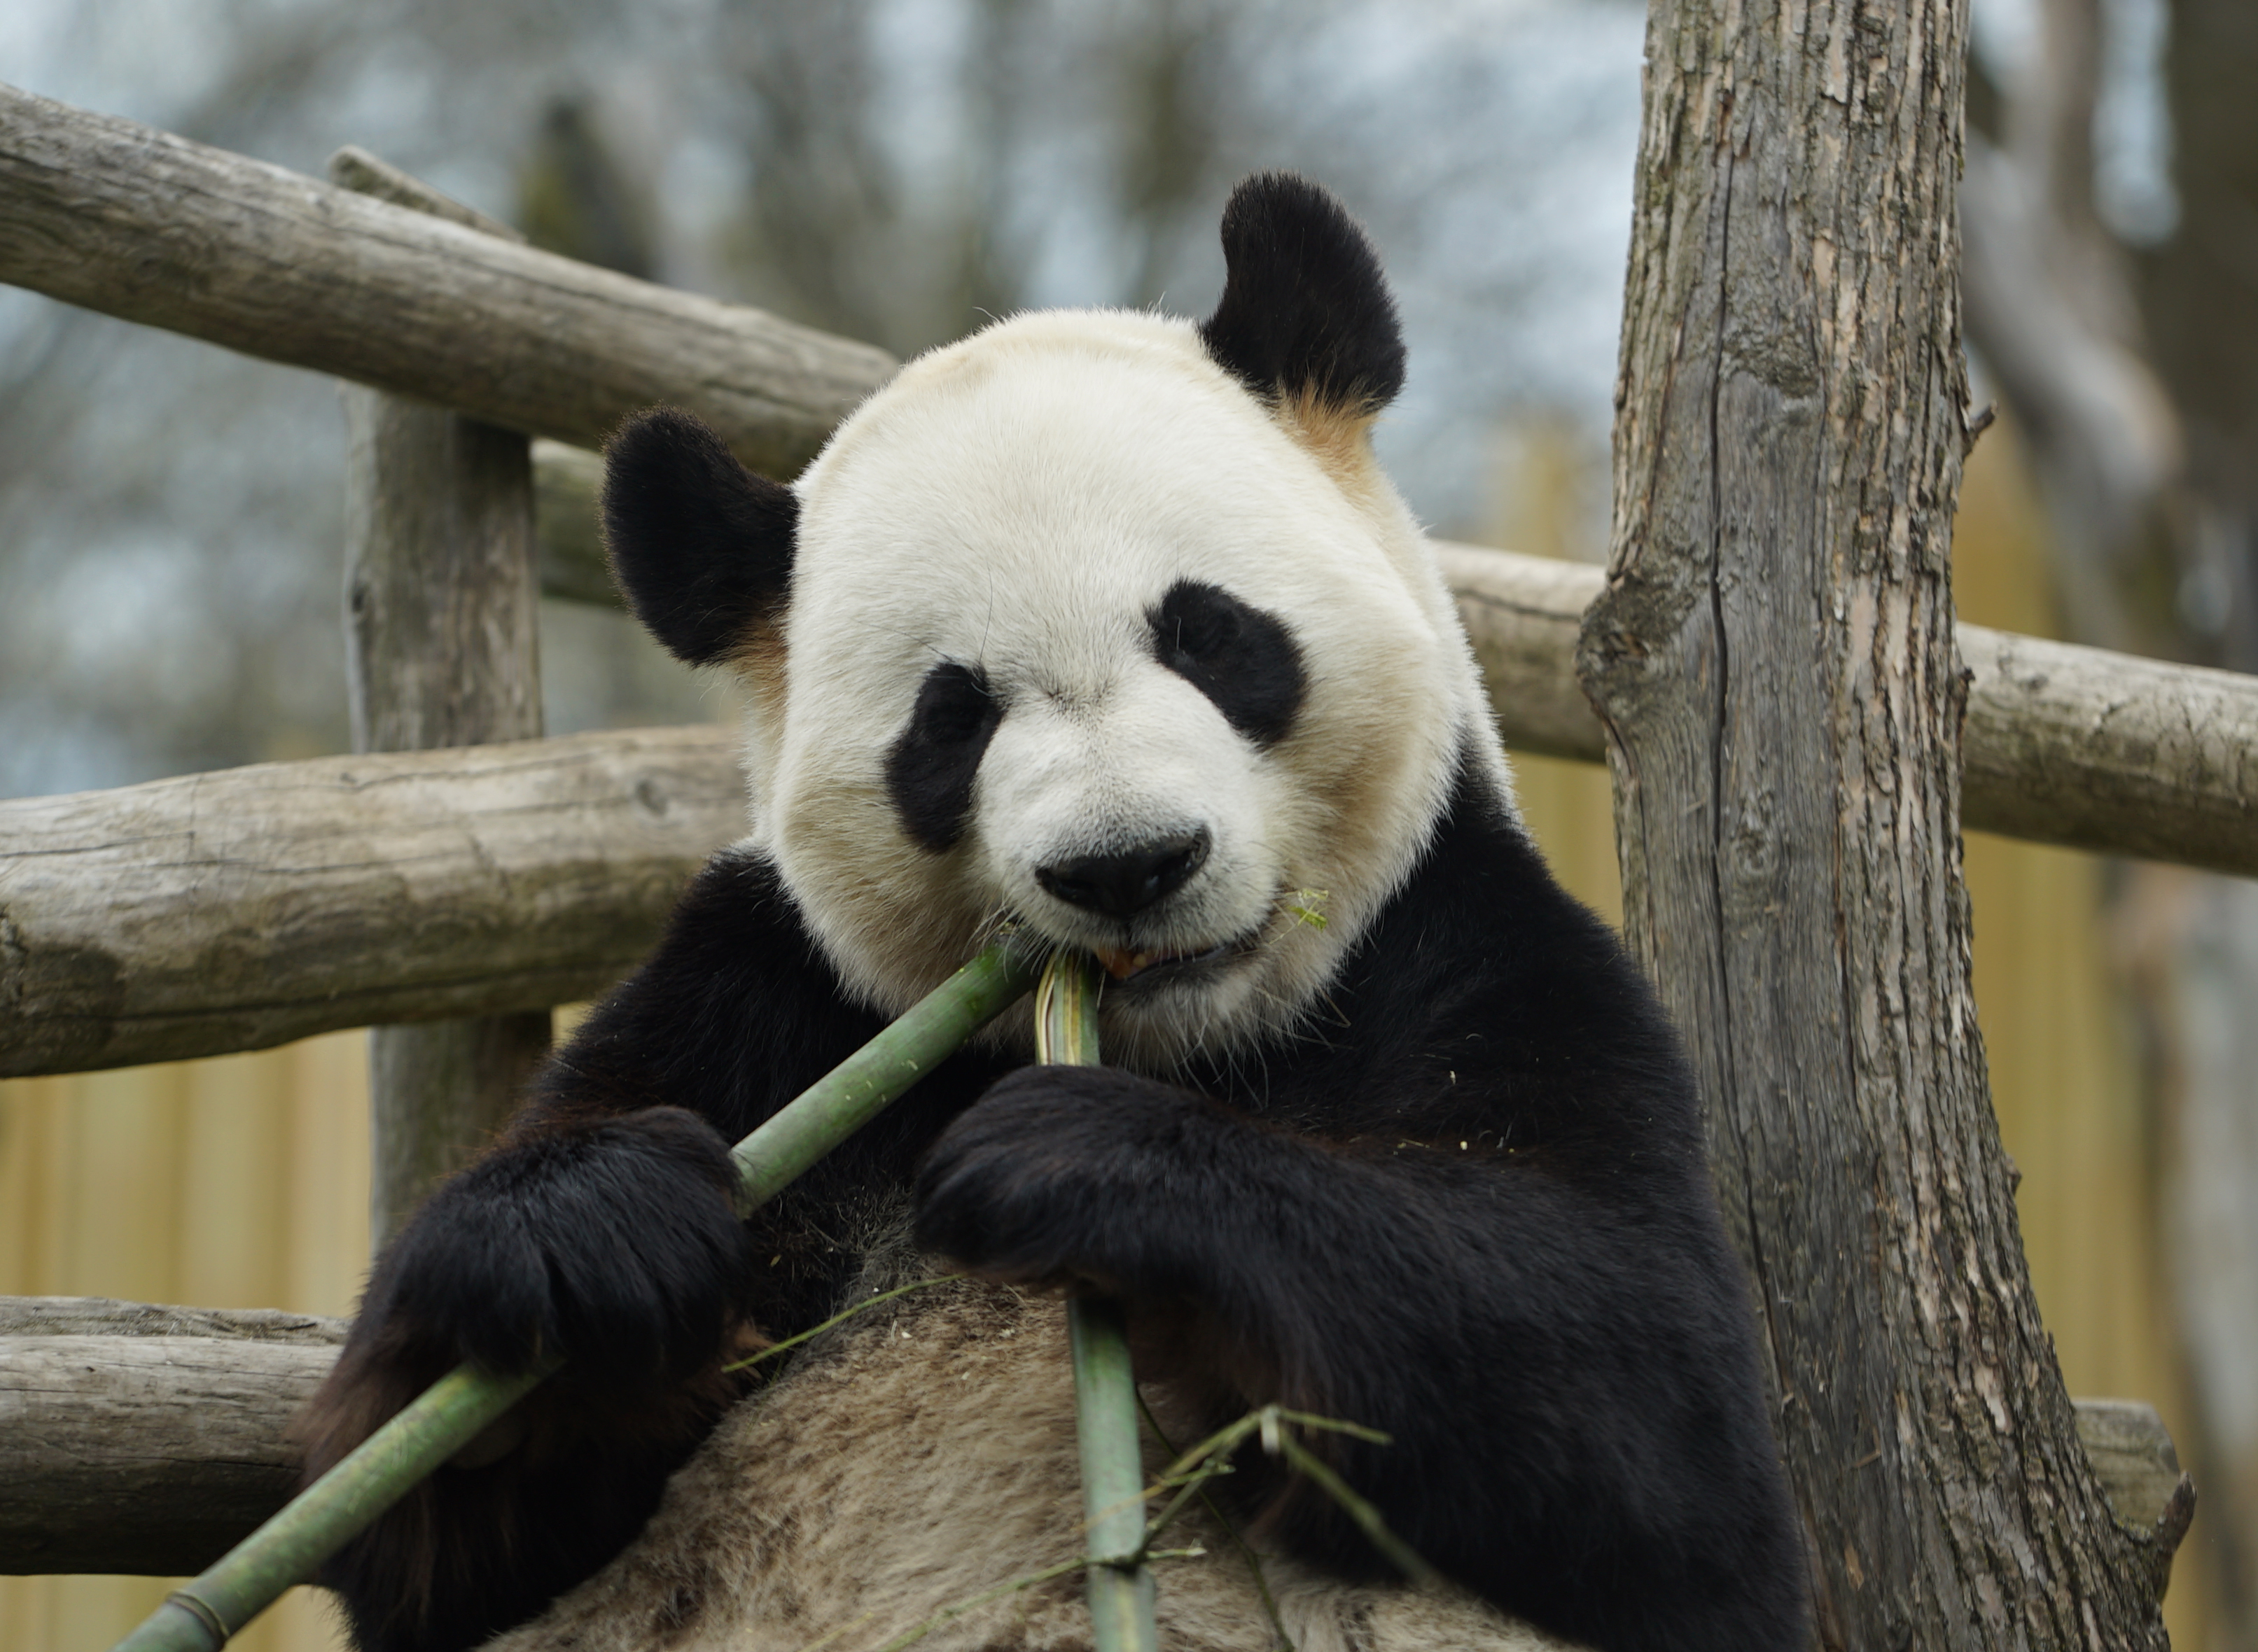 How can we help save giant pandas? | Calgary Zoo